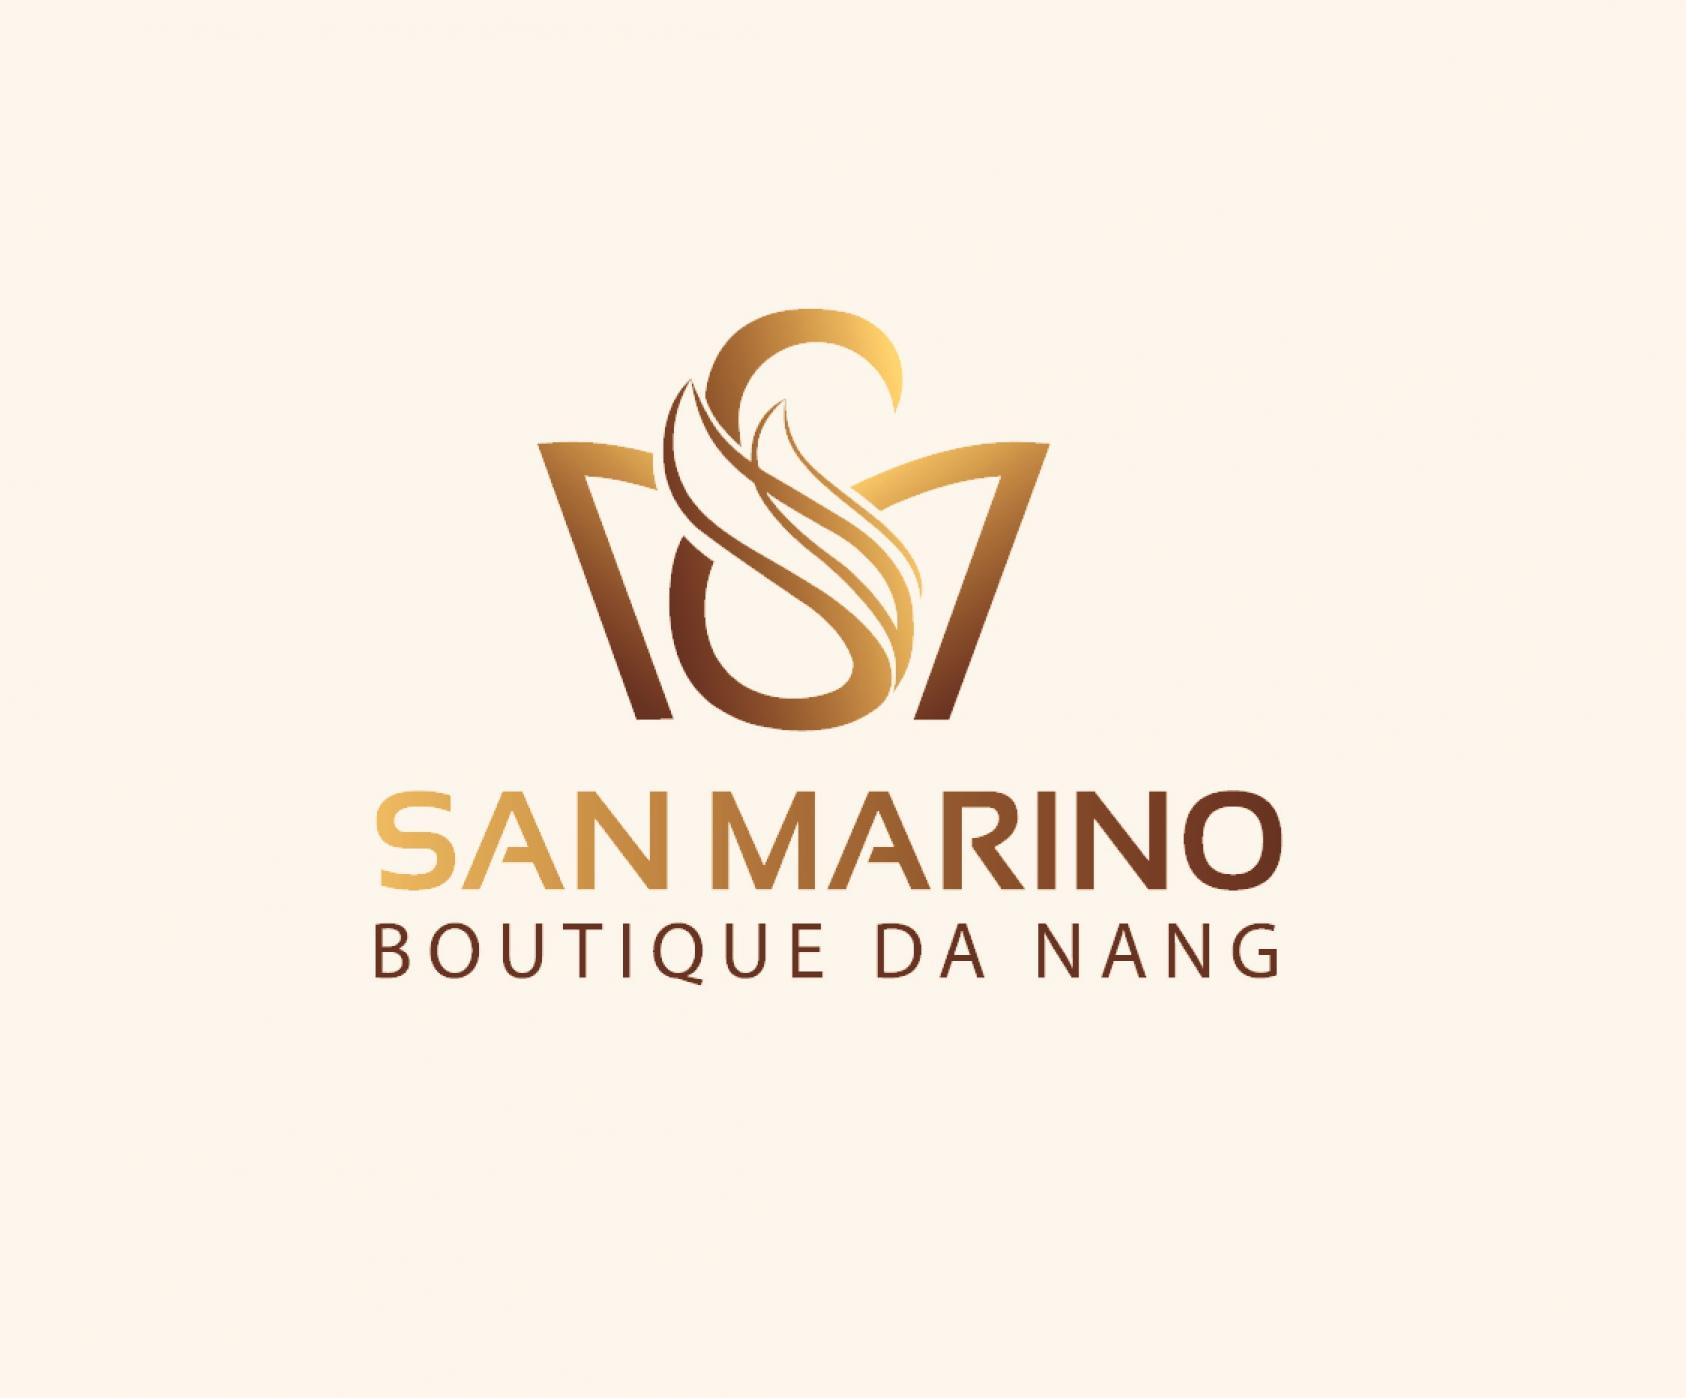 San Marino Boutique DaNang